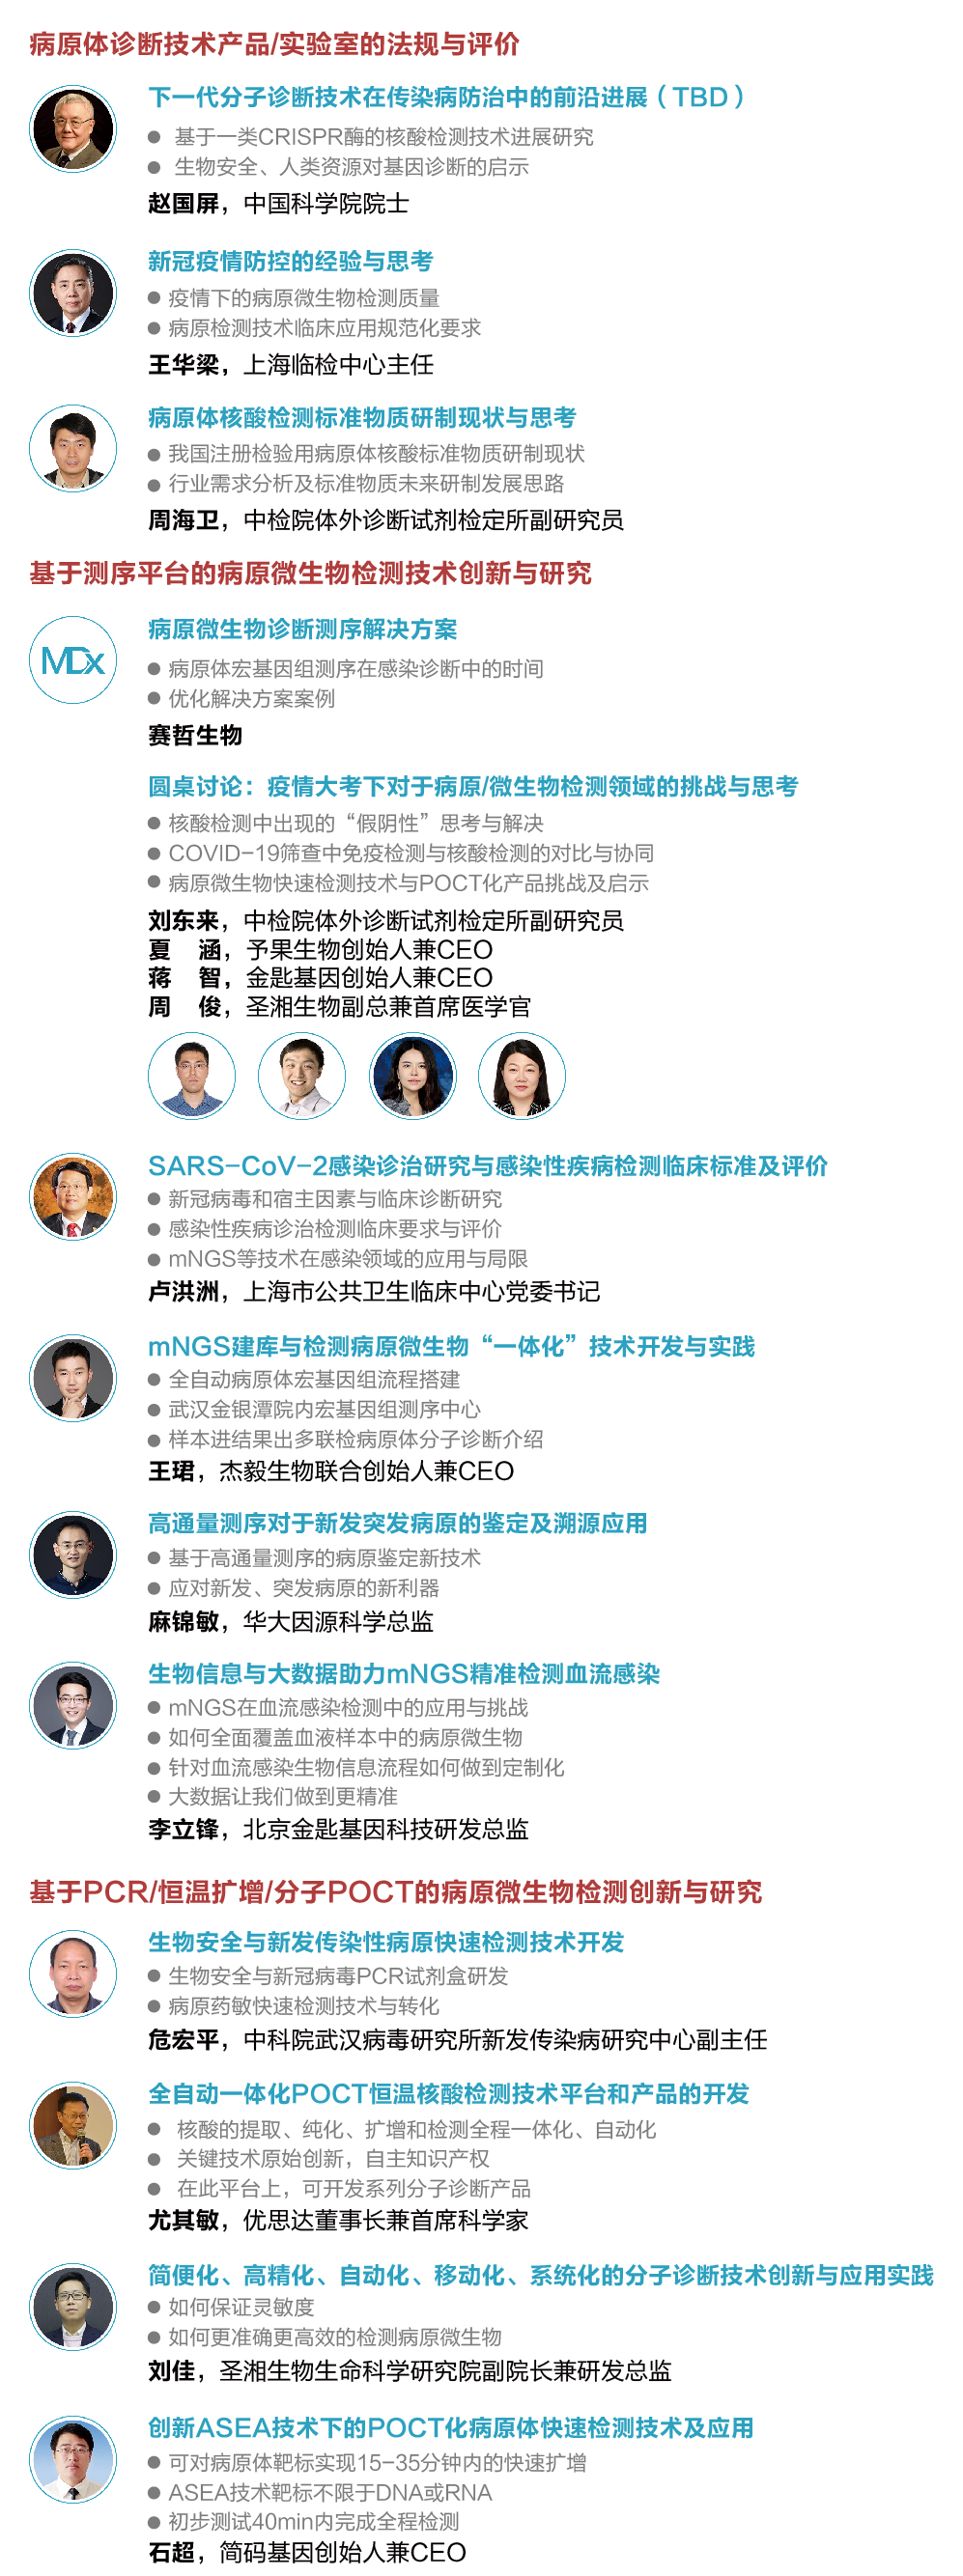 MDx 2020第六届中国先进分子诊断技术与应用论坛